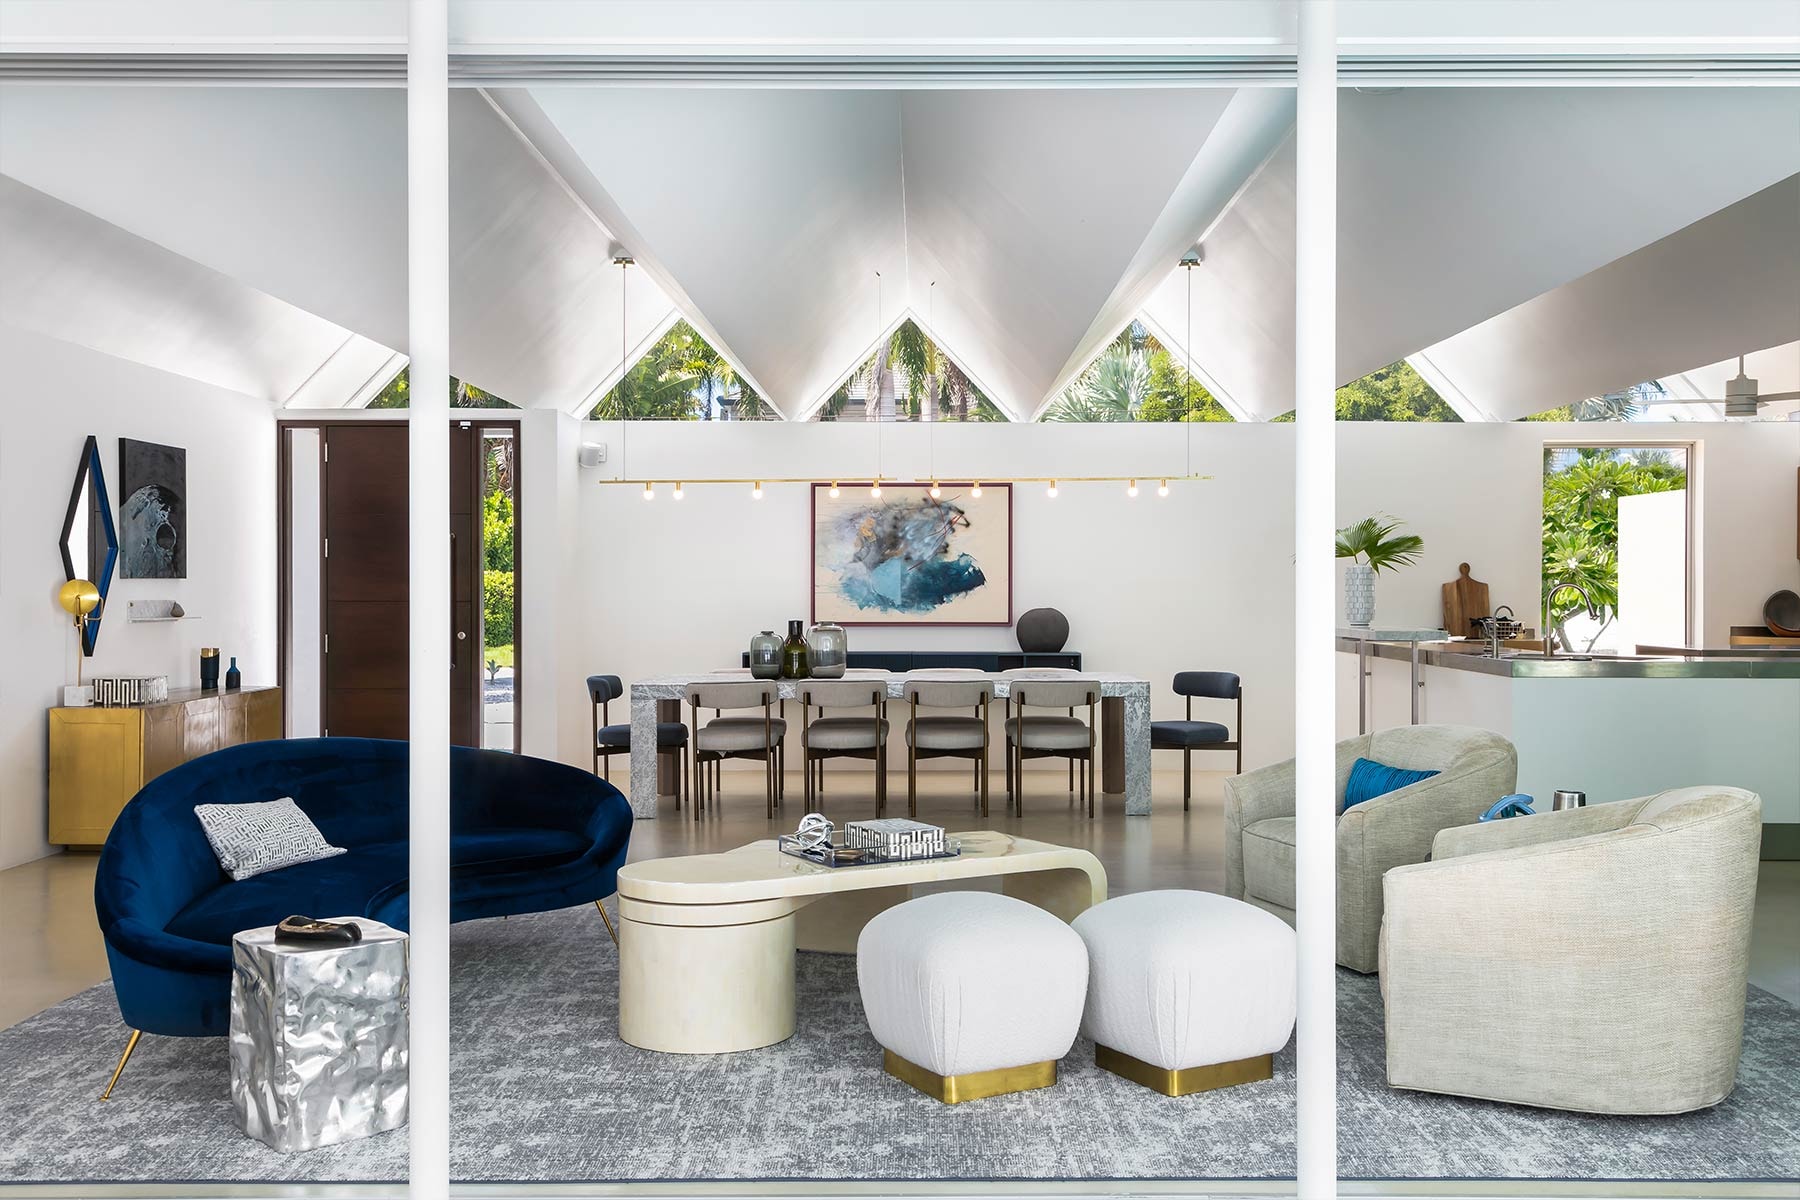 Zig Zag house Ralph Twitchell Sarasota, Florida $3M USD Sotheby’s Realty Listing Florida Umbrella House Paul Rudolph homes luxury 